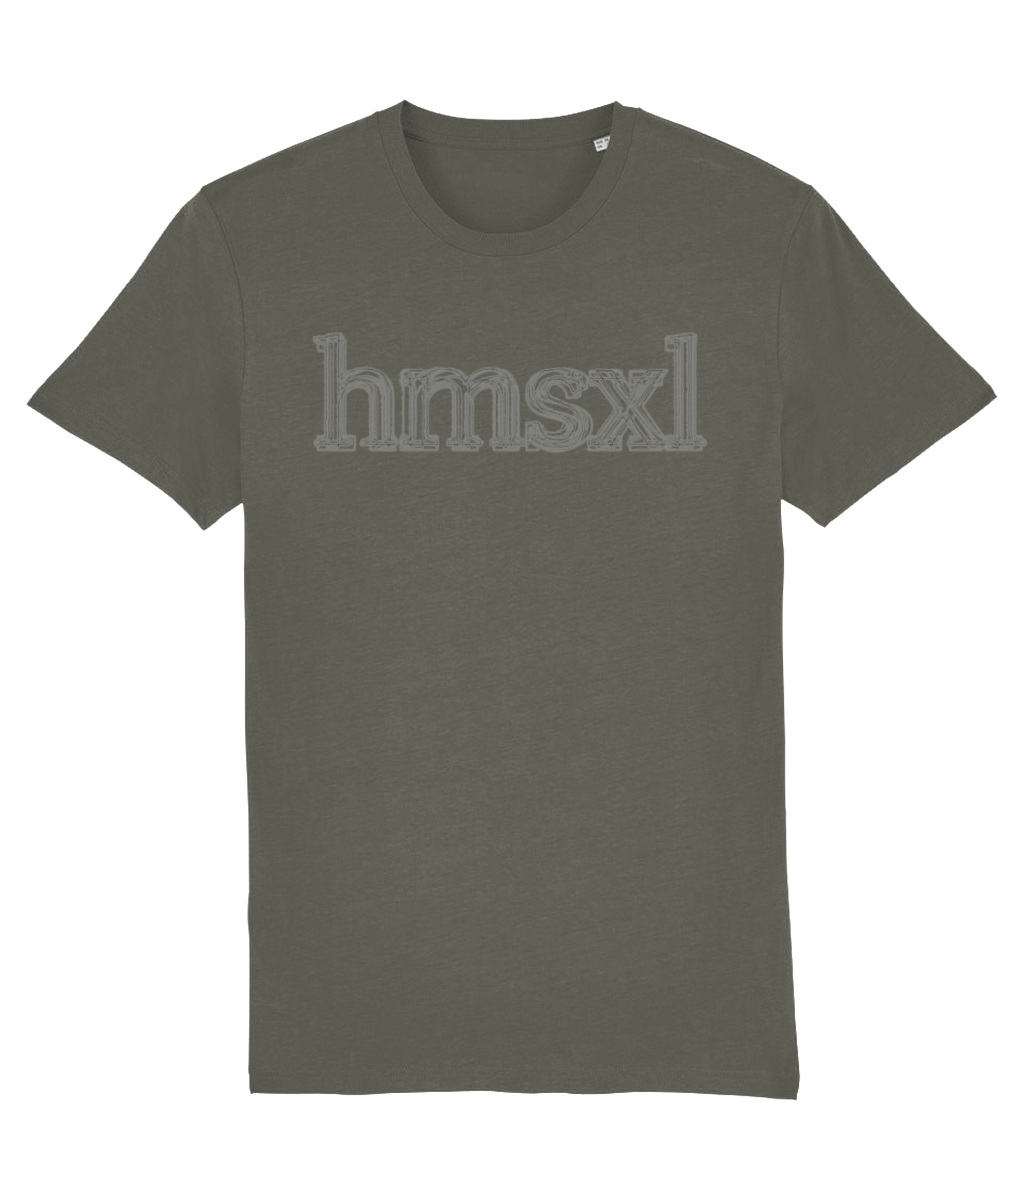 Army Green hmsxl T-Shirt